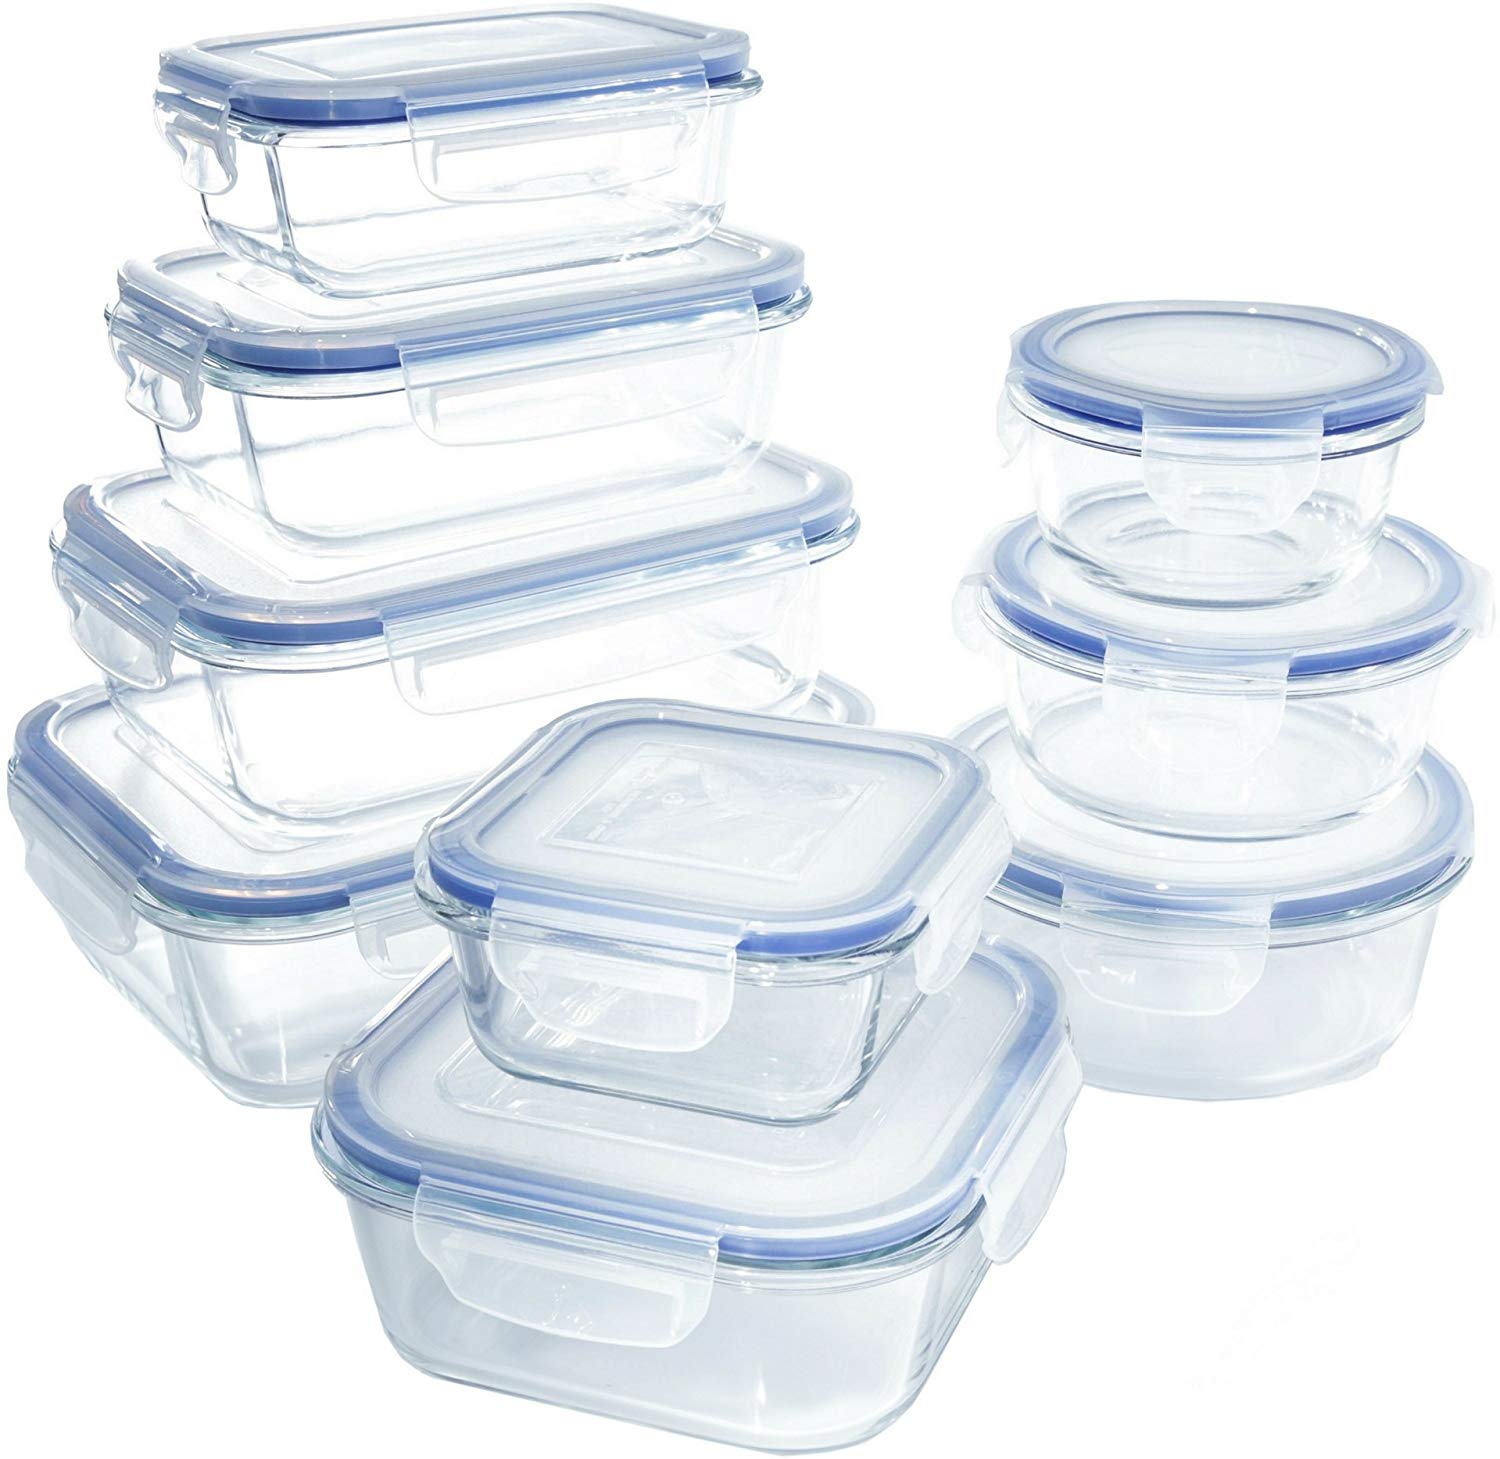 https://www.dontwasteyourmoney.com/wp-content/uploads/2019/11/1790-18-piece-glass-food-storage-container-set-bpa-free-kitchen-containers-storage-set-tupperware-set.jpg